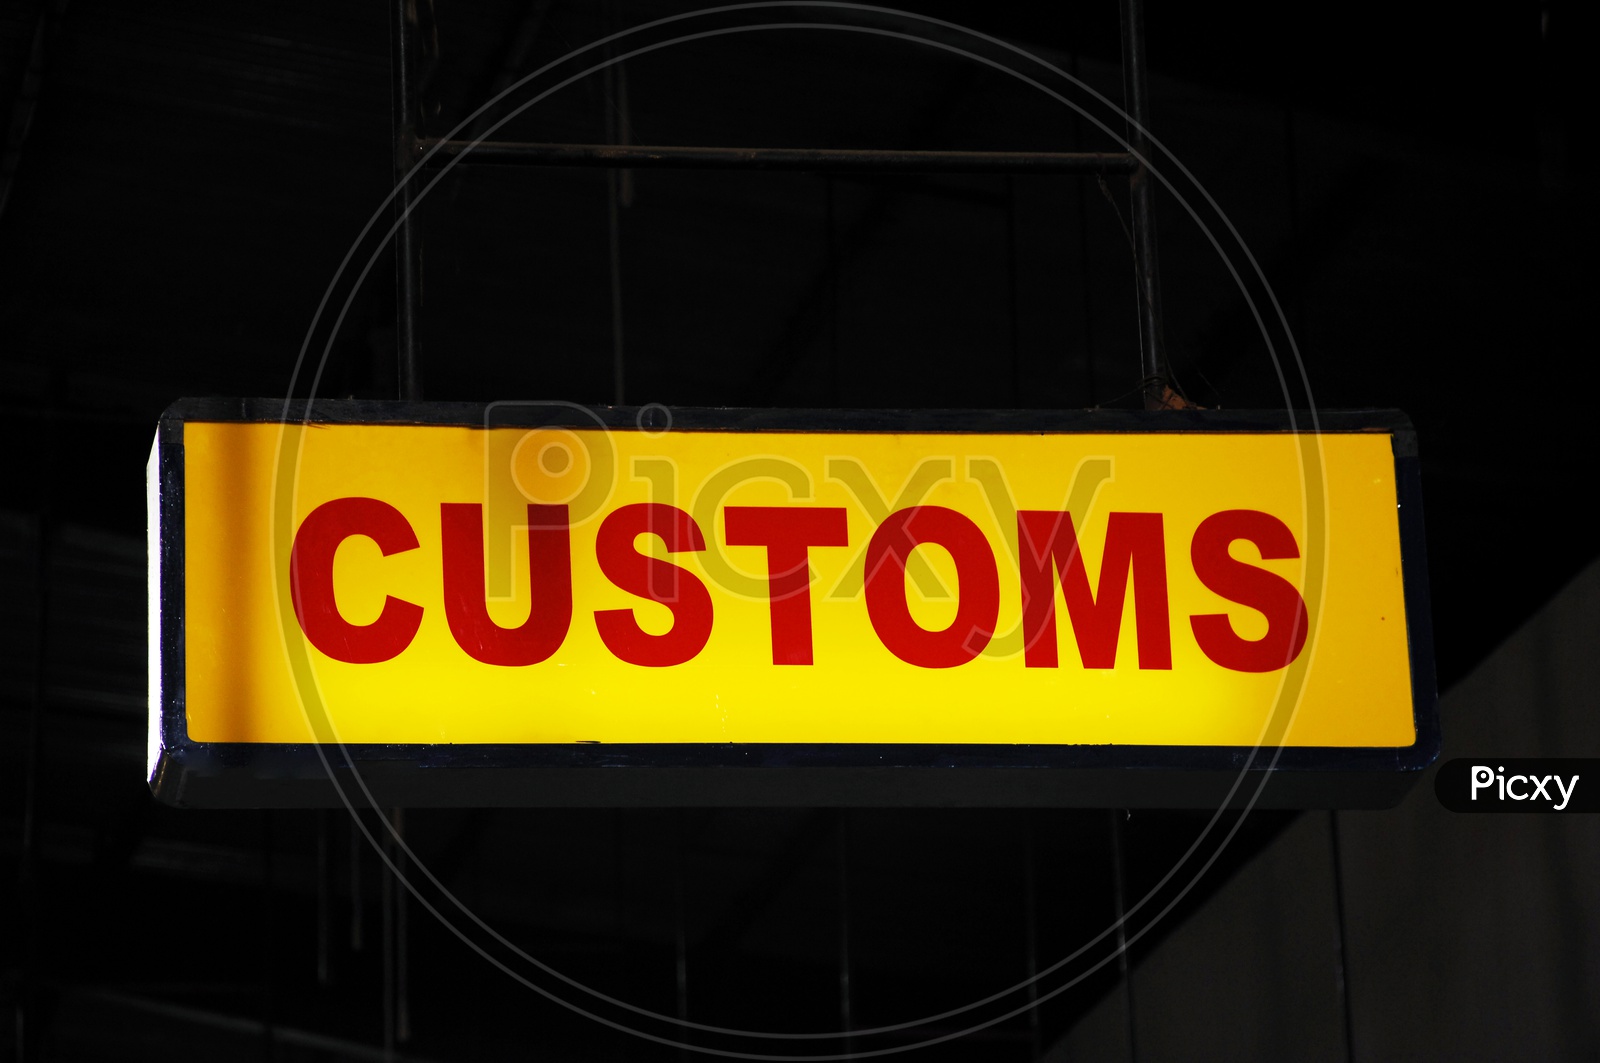 Customs Name Board In Airport